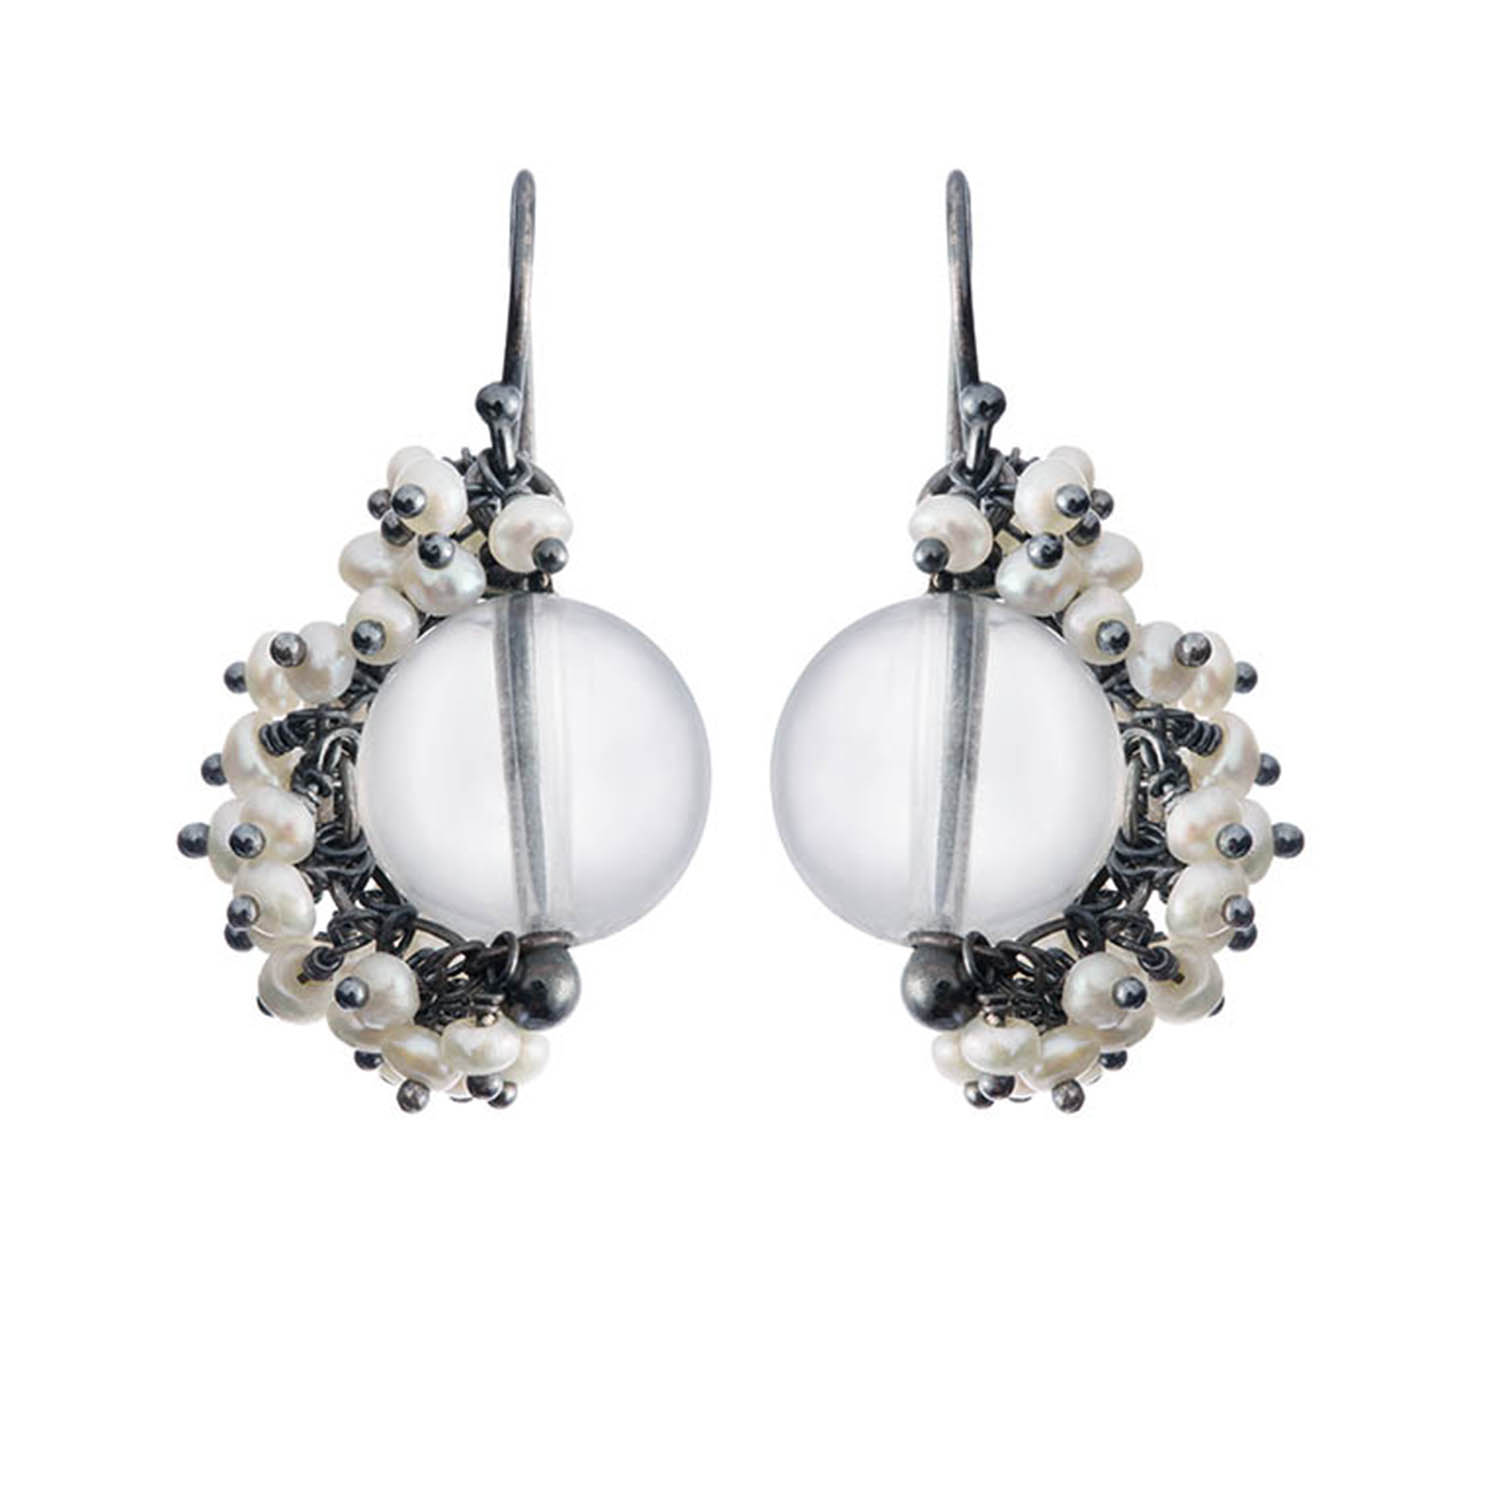 Michelle Pajak-Reynolds Undina Collection Venus earrings